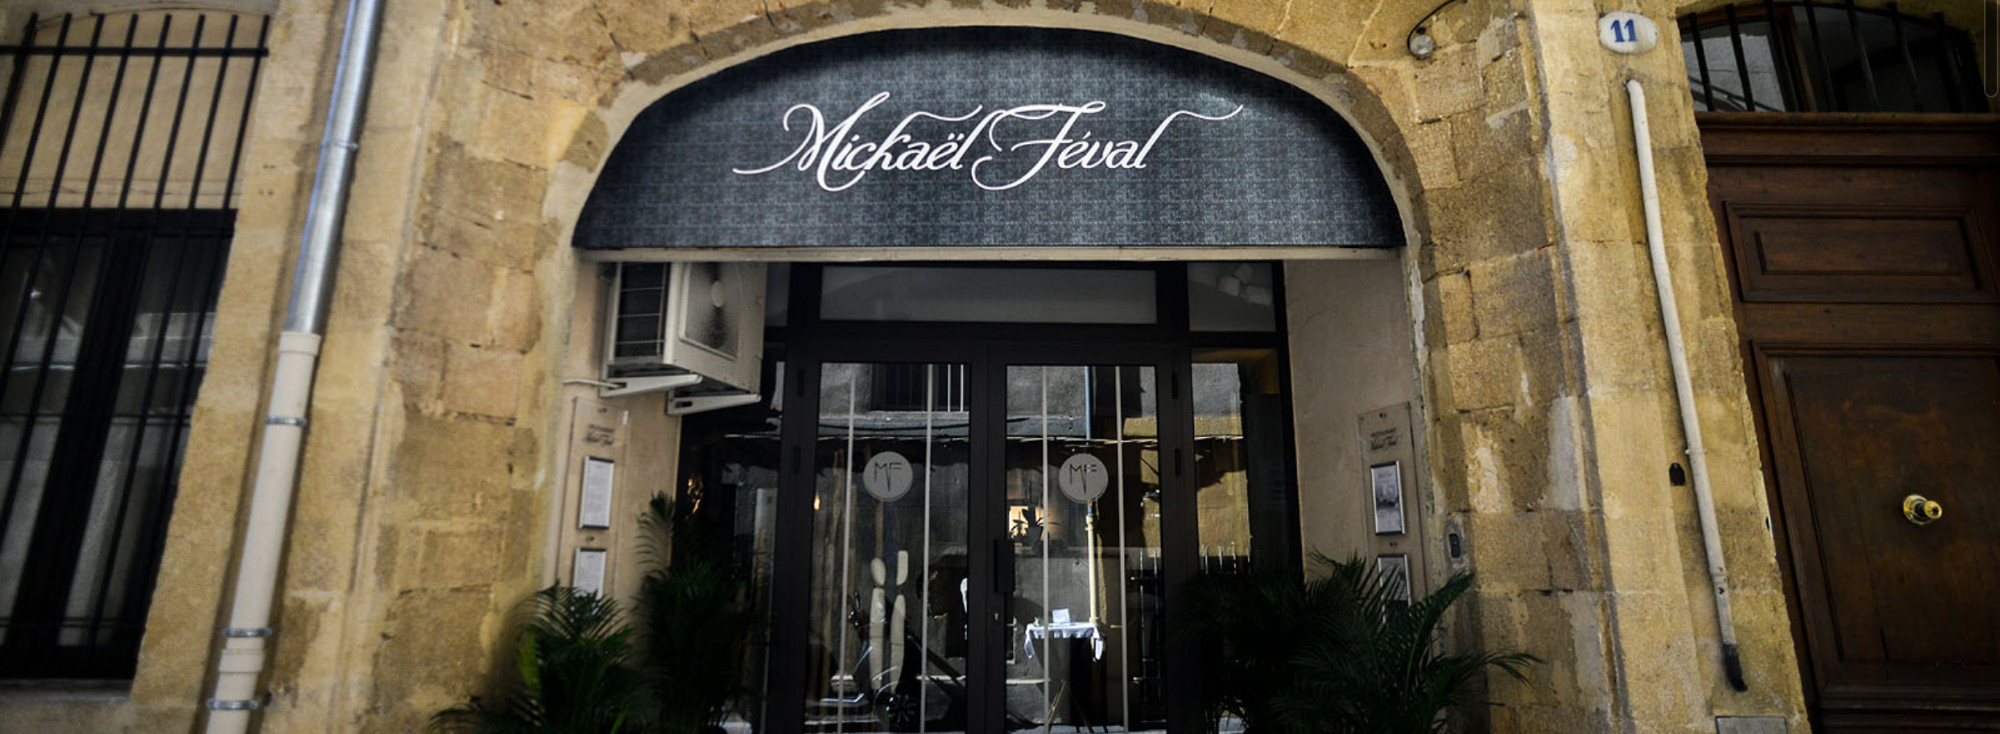 Restaurant Mickaël Féval Aix en Provence - Restaurant - Aix en Provence